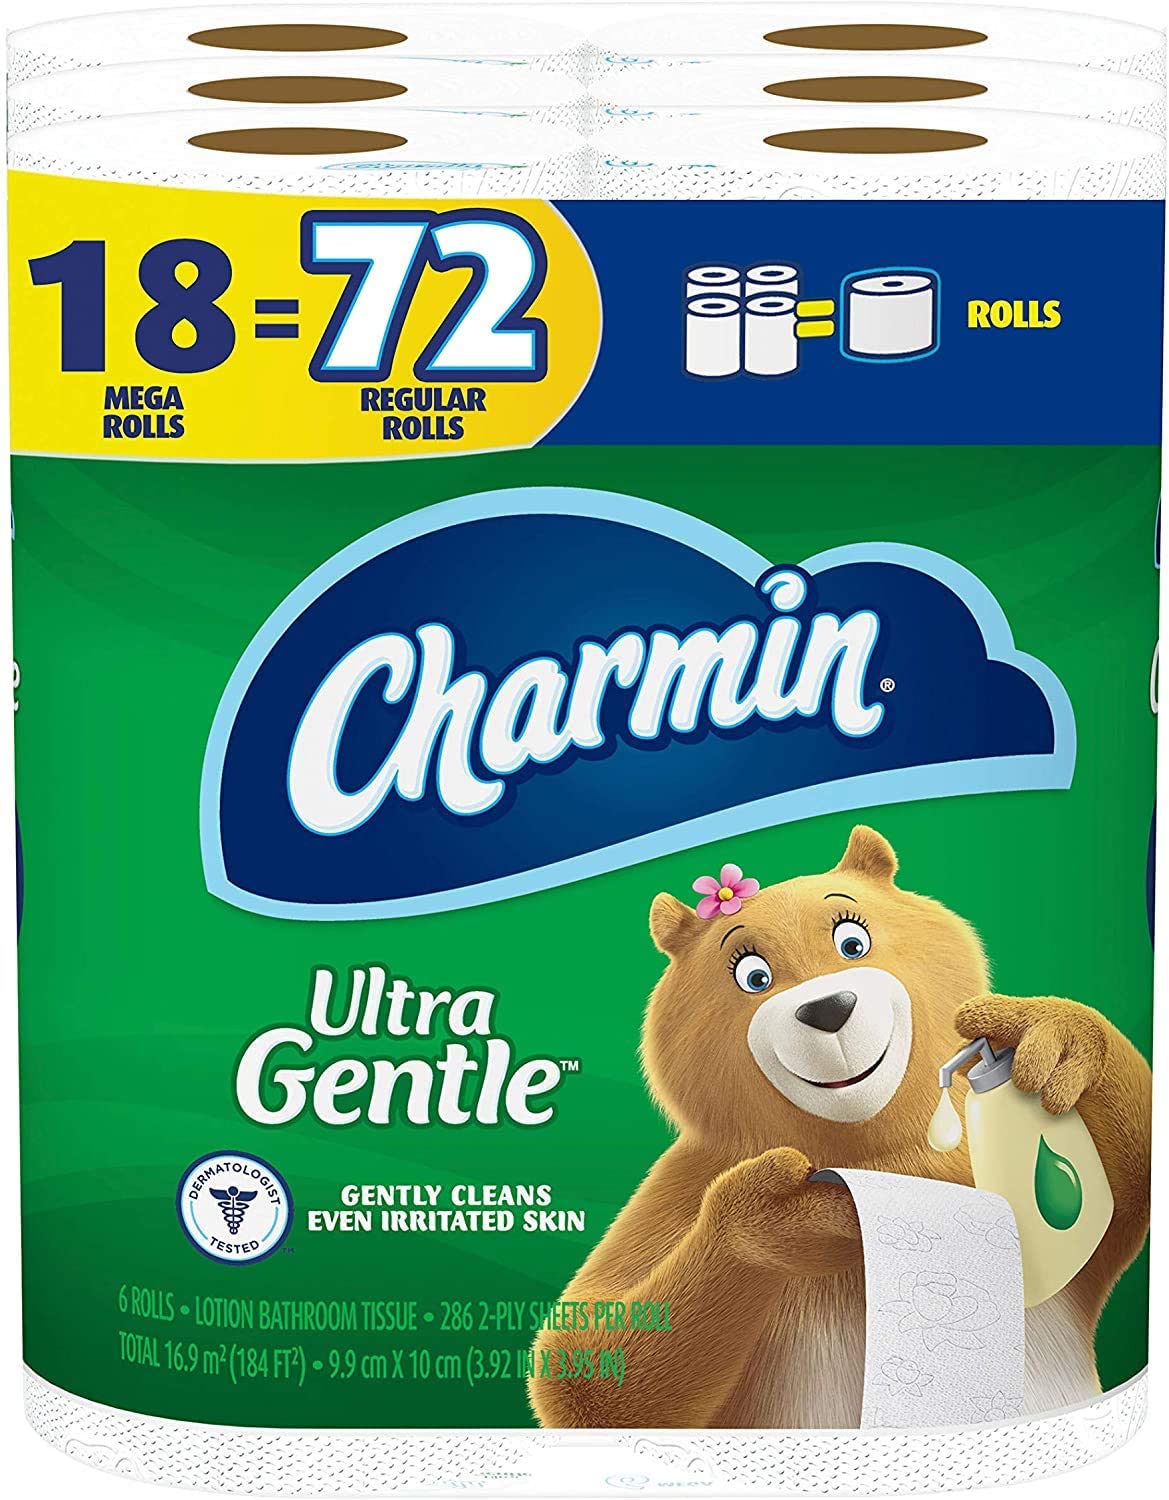 Charmin Ultra Gentle Toilet Paper, 18 Mega Rolls = 72 Regular Rolls $19.46